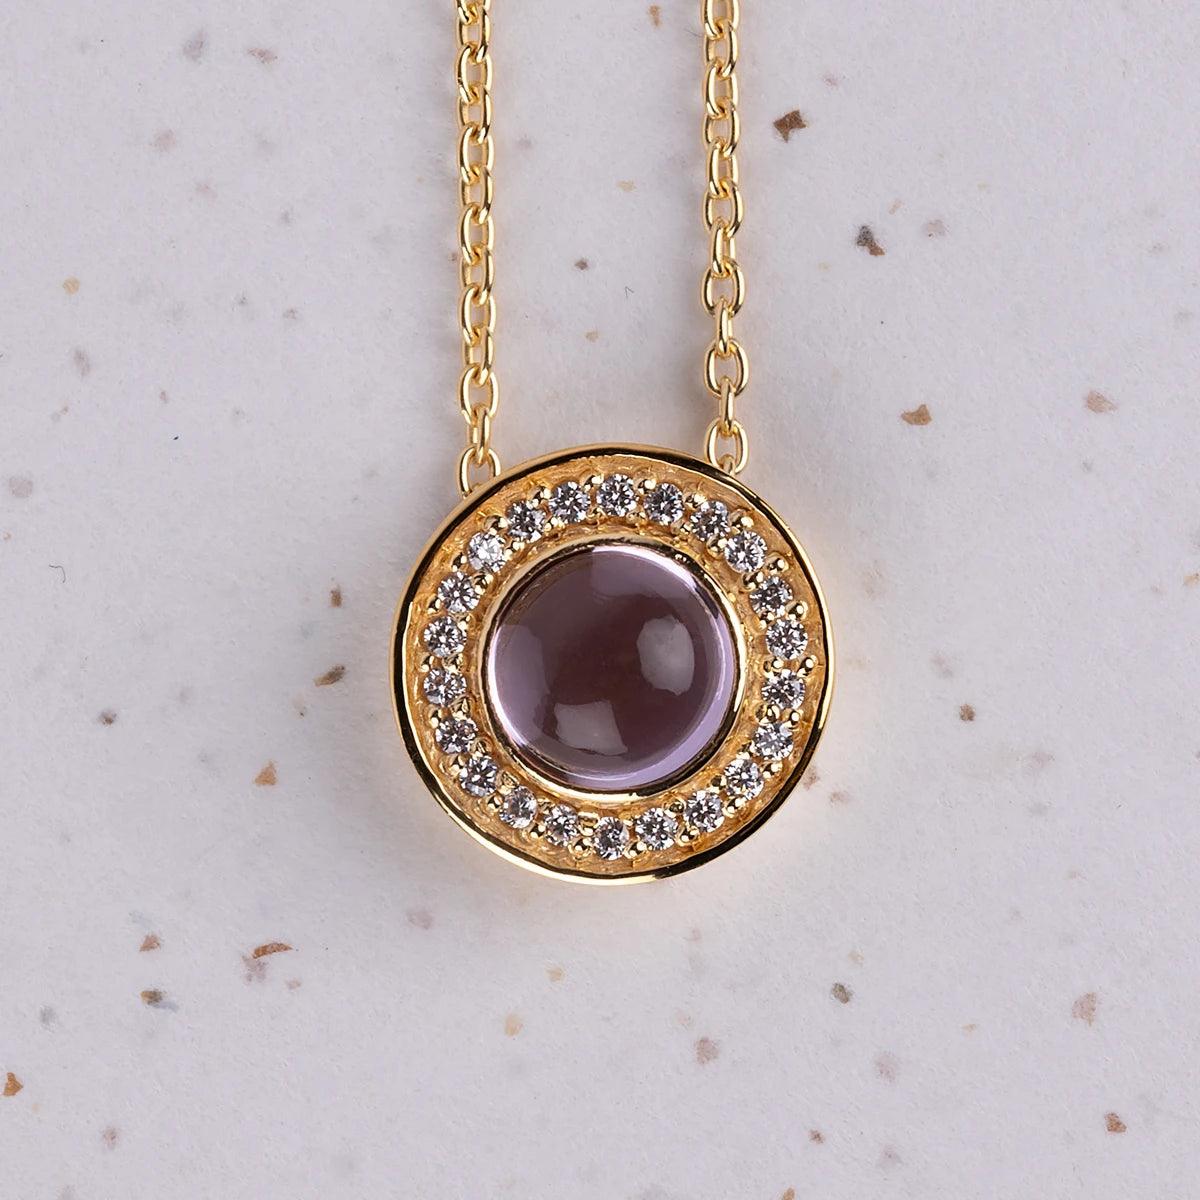 Caroline Bingley's Gold-Plated Amethyst Necklace - JaneAusten.co.uk